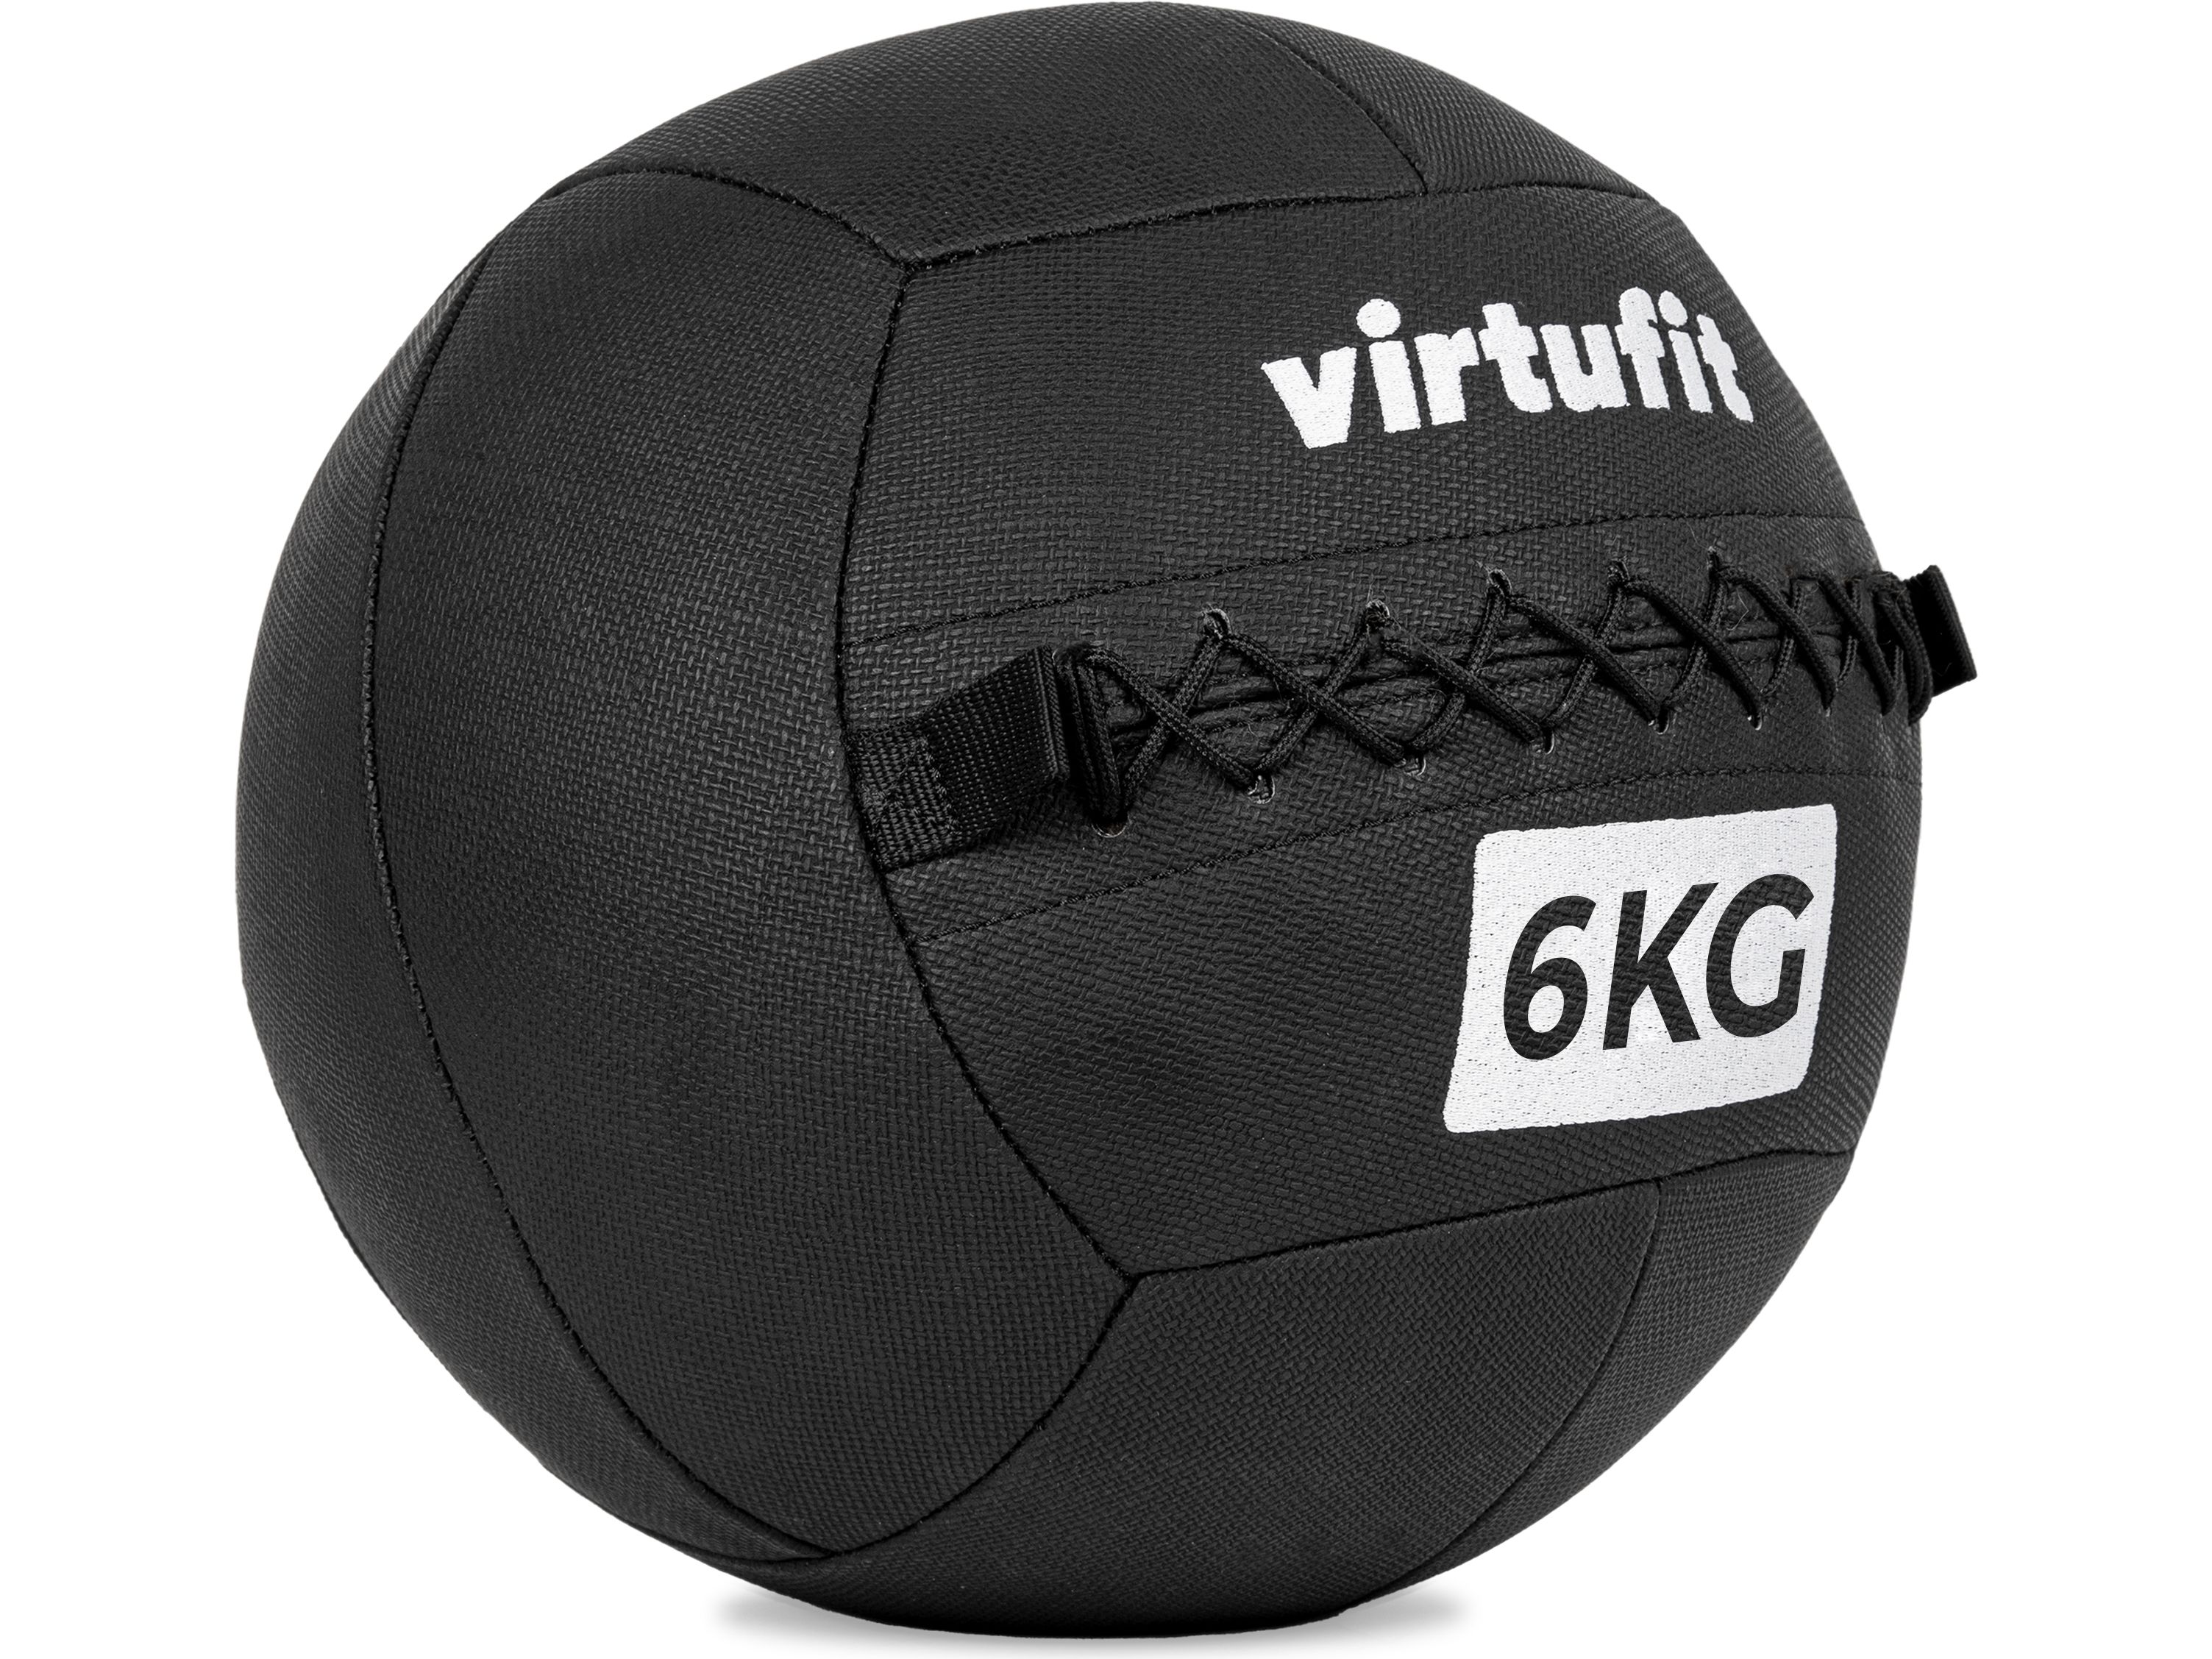 virtufit-premium-medizinball-6-kg